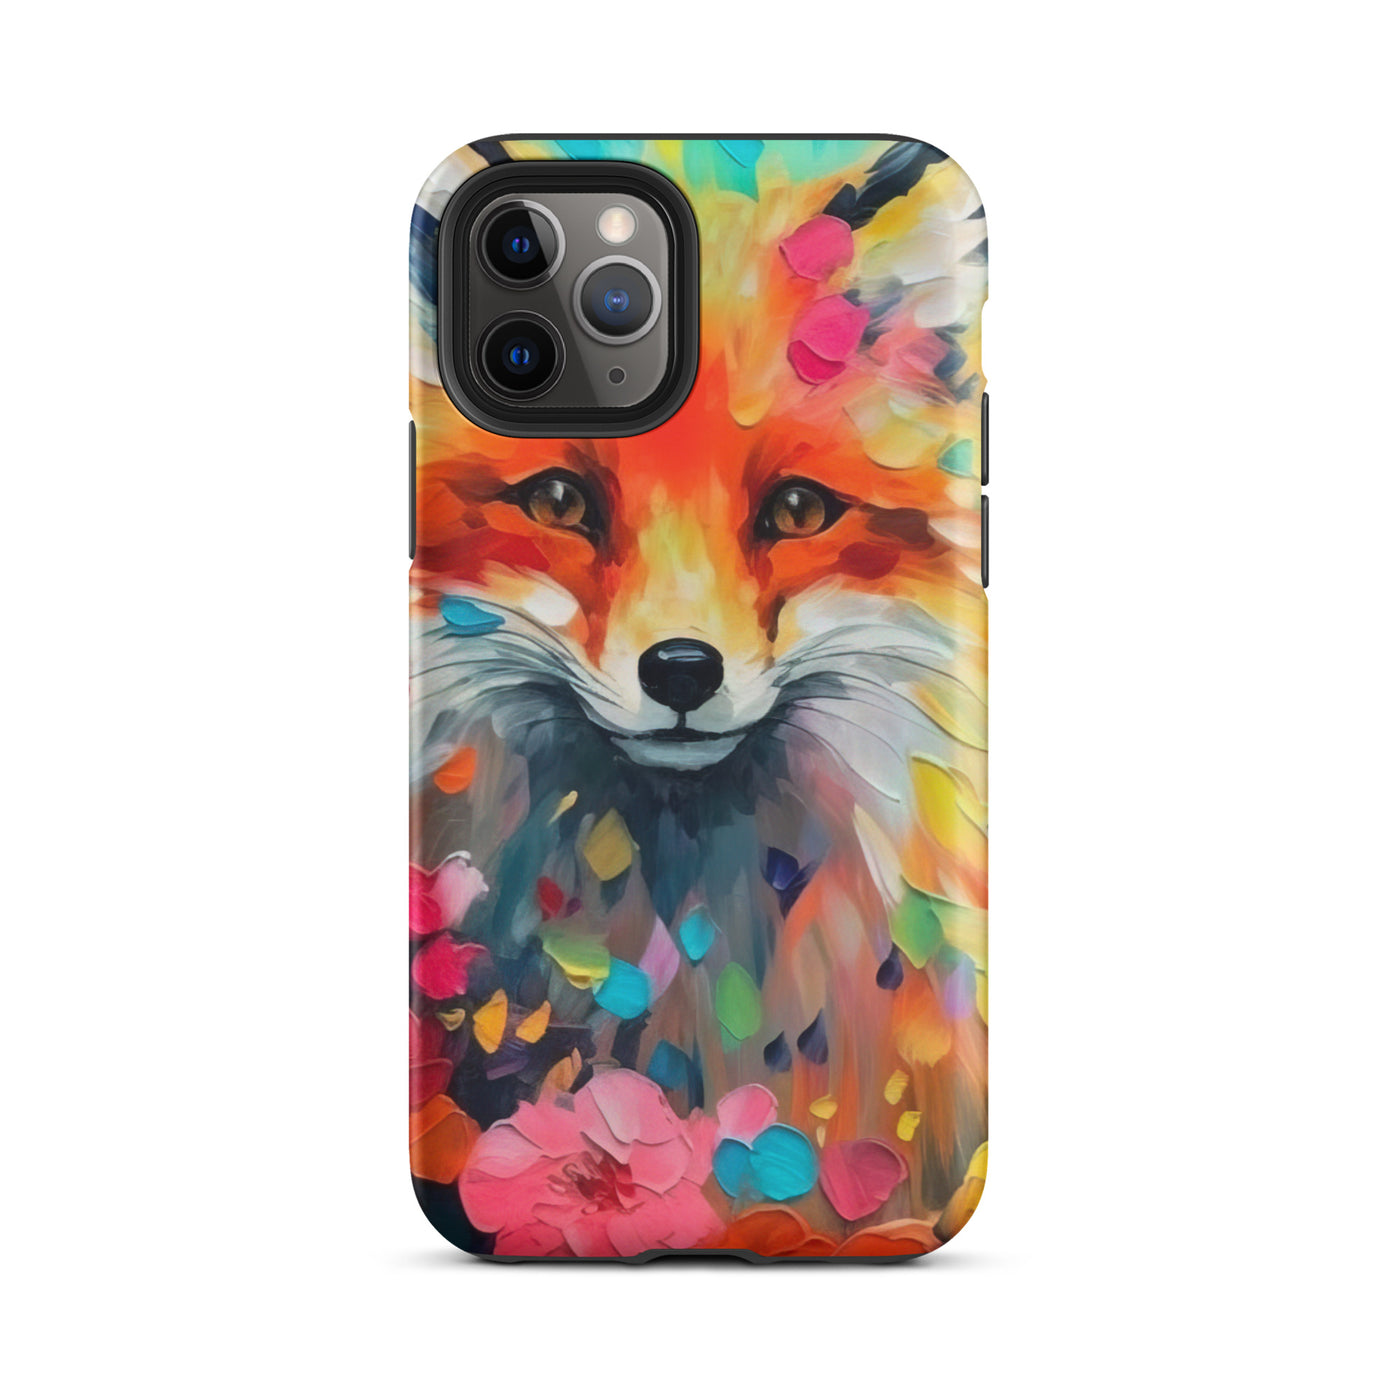 Schöner Fuchs im Blumenfeld - Farbige Malerei - iPhone Schutzhülle (robust) camping xxx iPhone 11 Pro